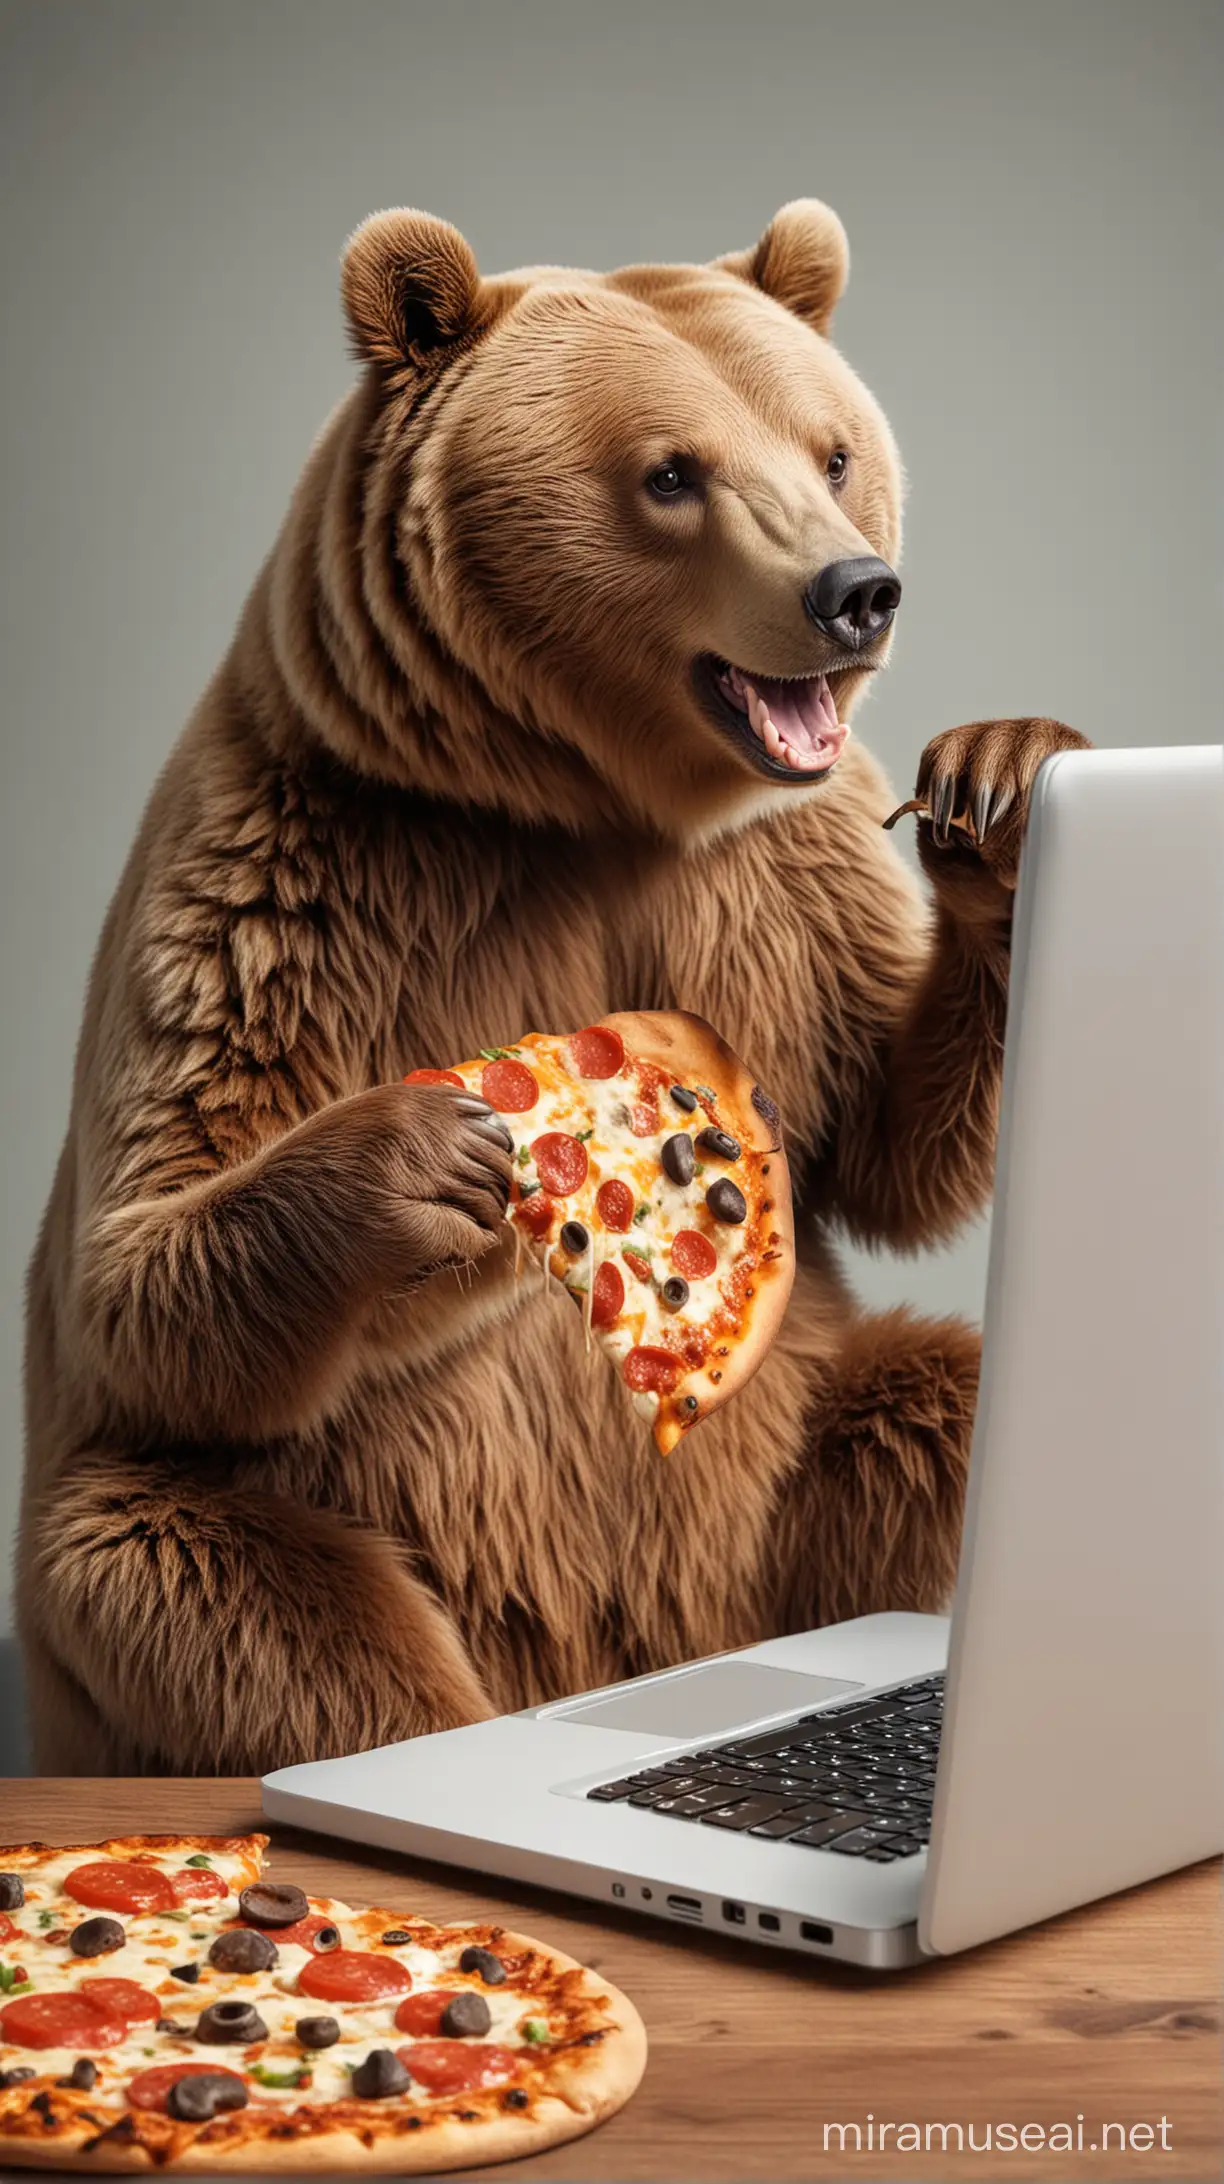 Bear Working on Laptop While Enjoying Pizza